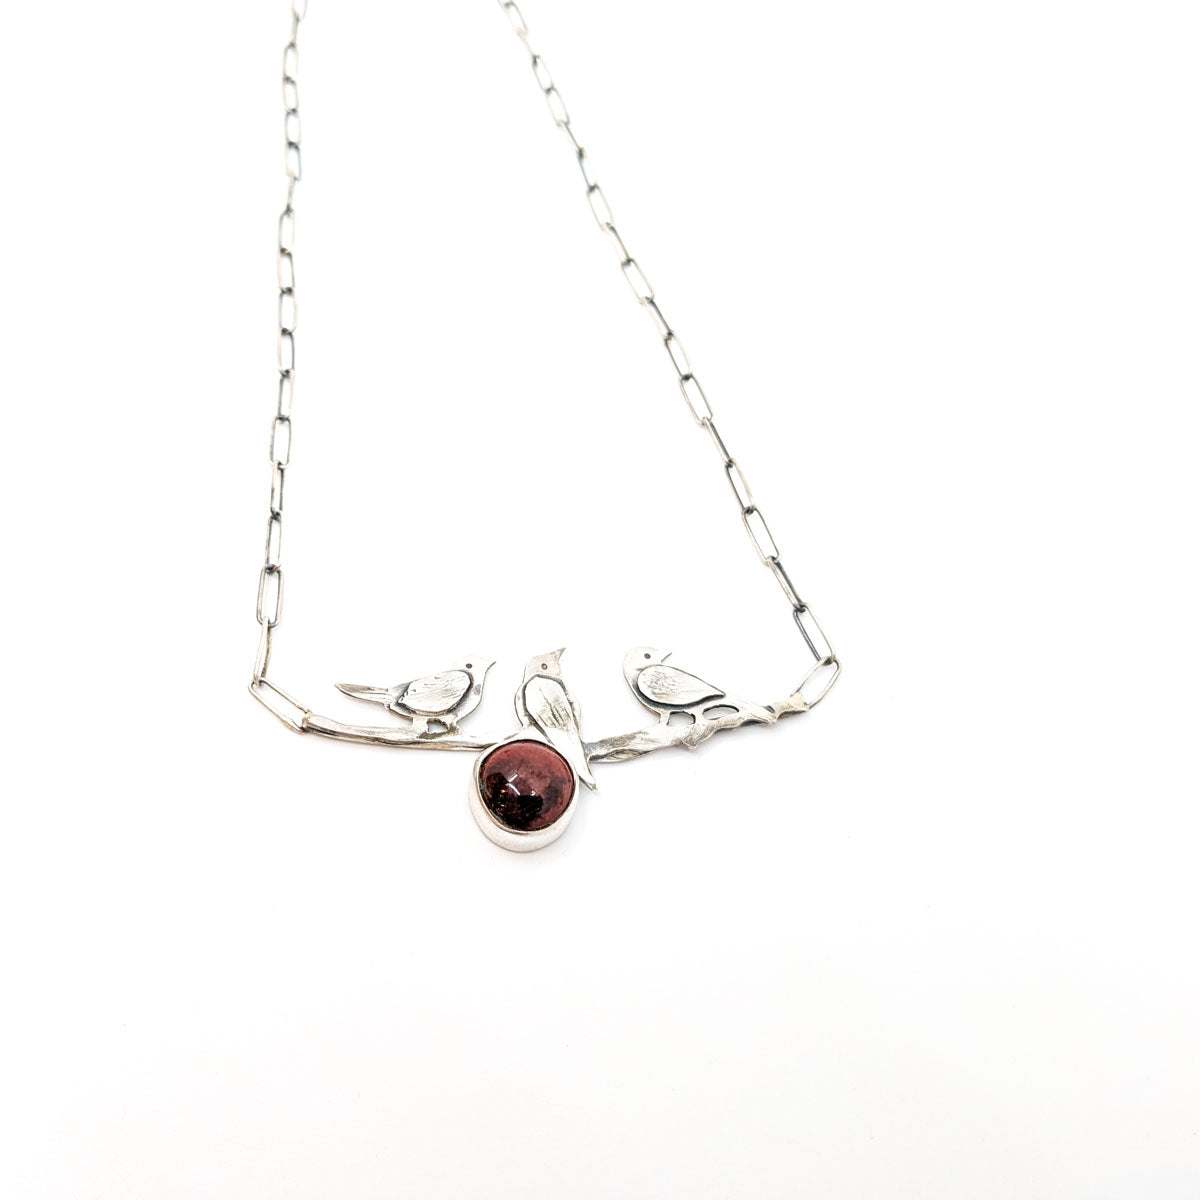 Peachbloom with Three Birds Necklace